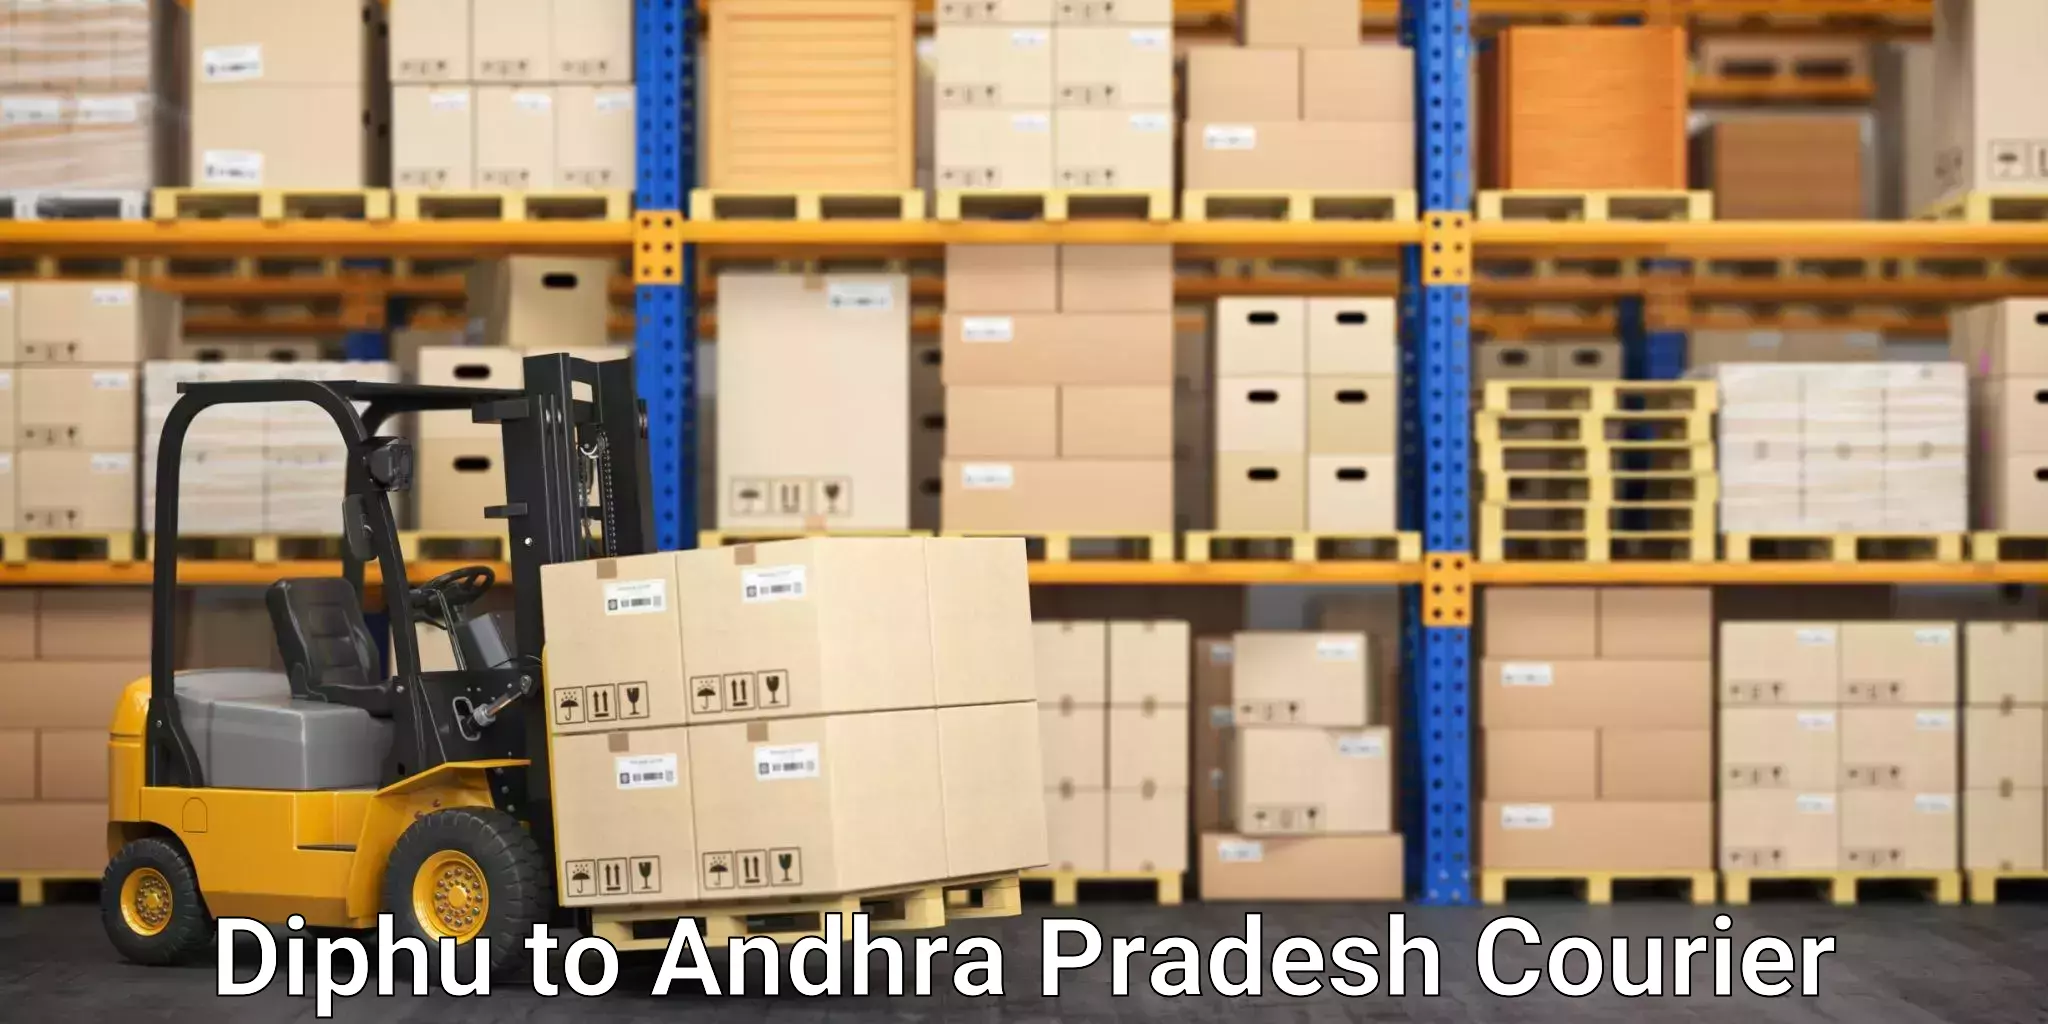 Comprehensive parcel tracking Diphu to Andhra Pradesh